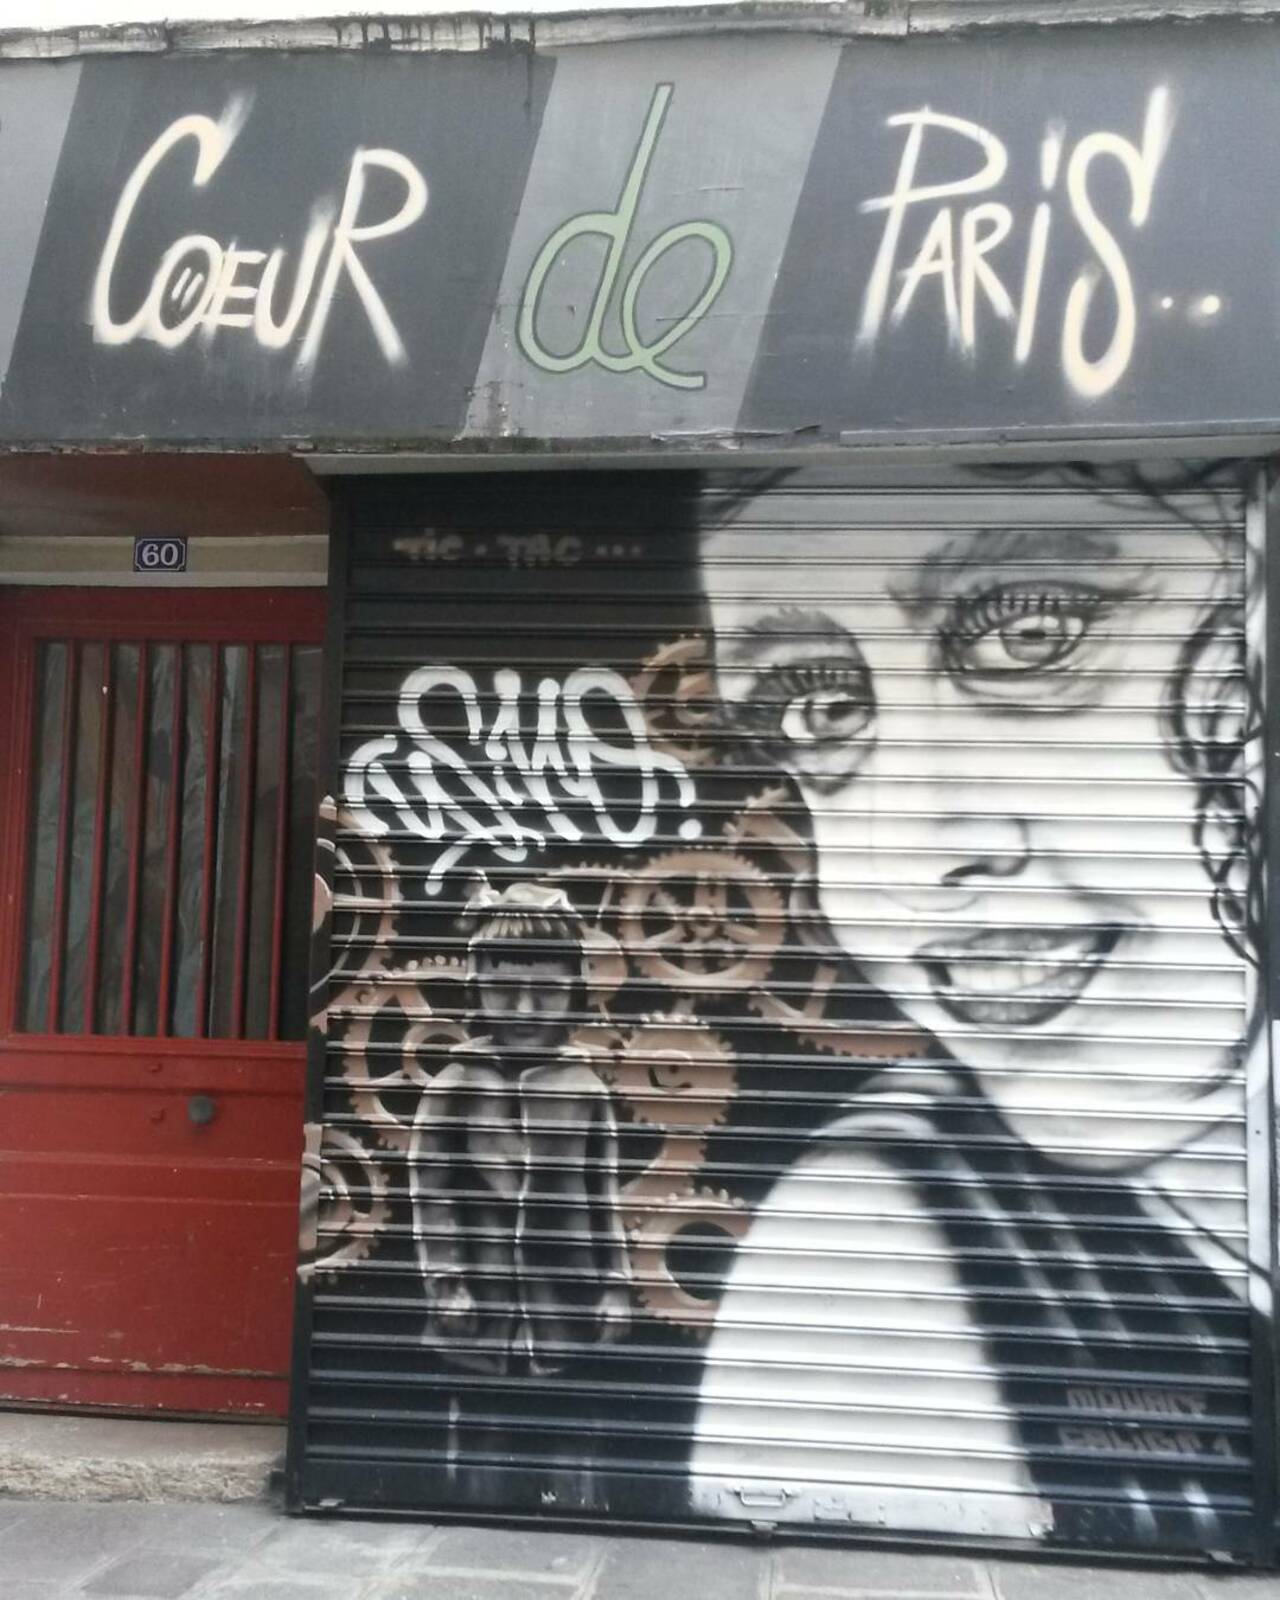 #Paris #graffiti photo by @le_cyclopede http://ift.tt/1P9TH76 #StreetArt http://t.co/3pYg7gpRDD